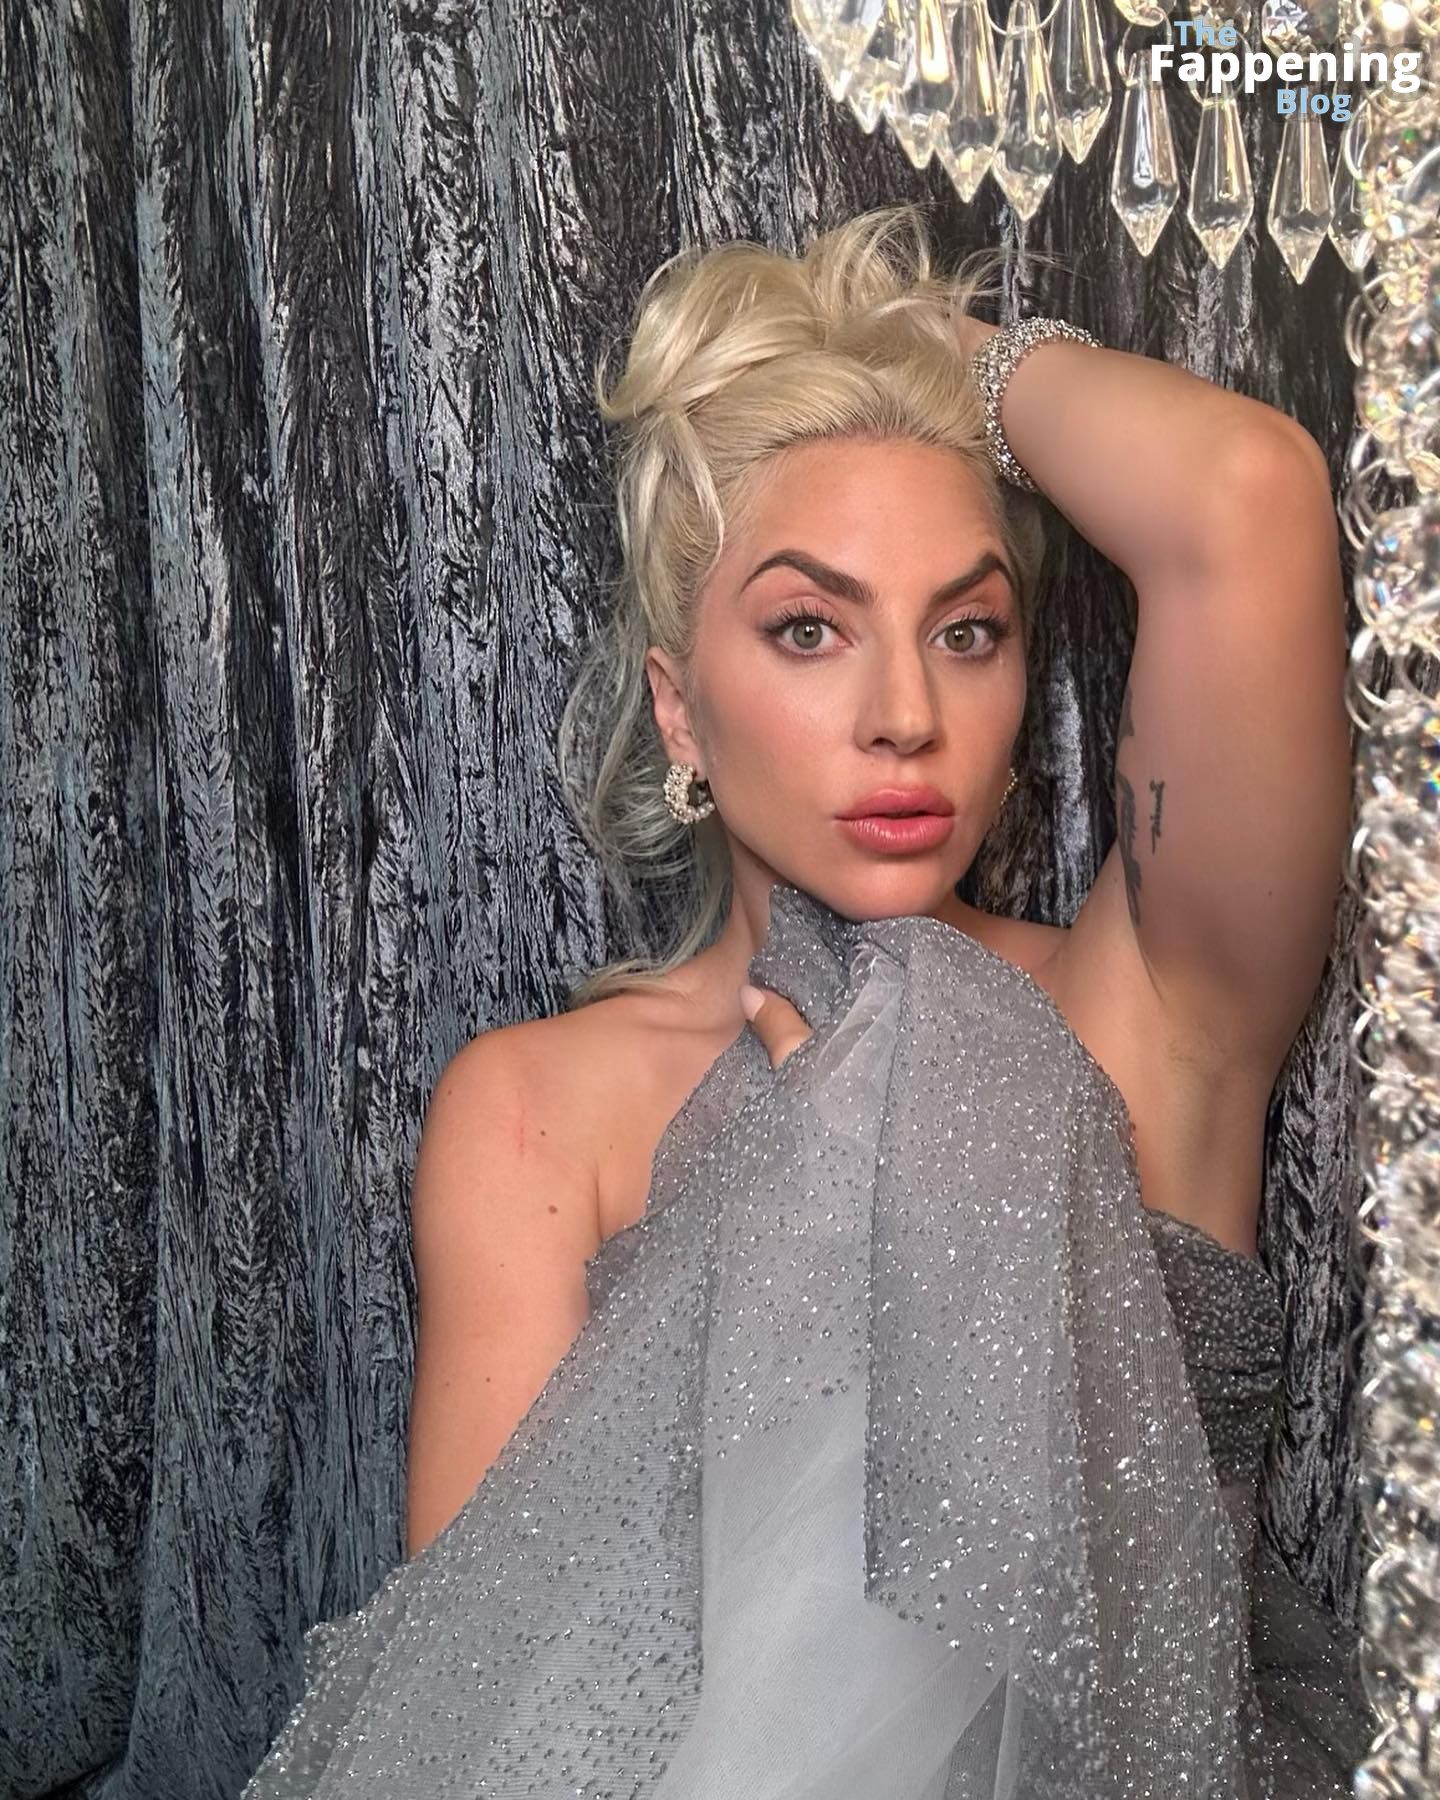 Lady-Gaga-Sexy-1-The-Fappening-Blog.jpg